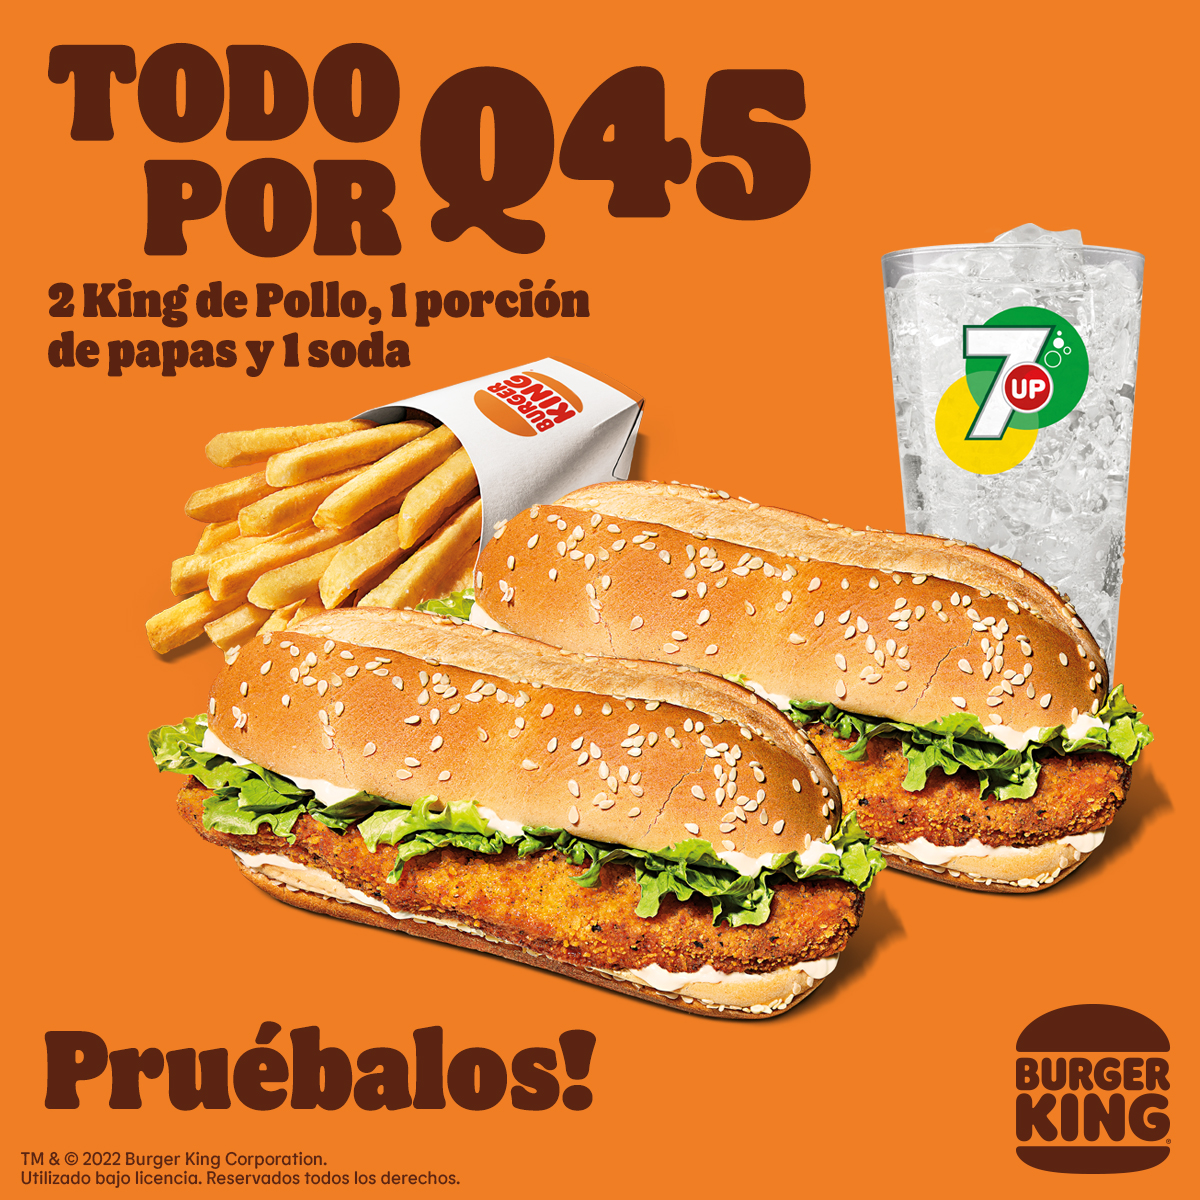 Burger King Guatemala on Twitter: 